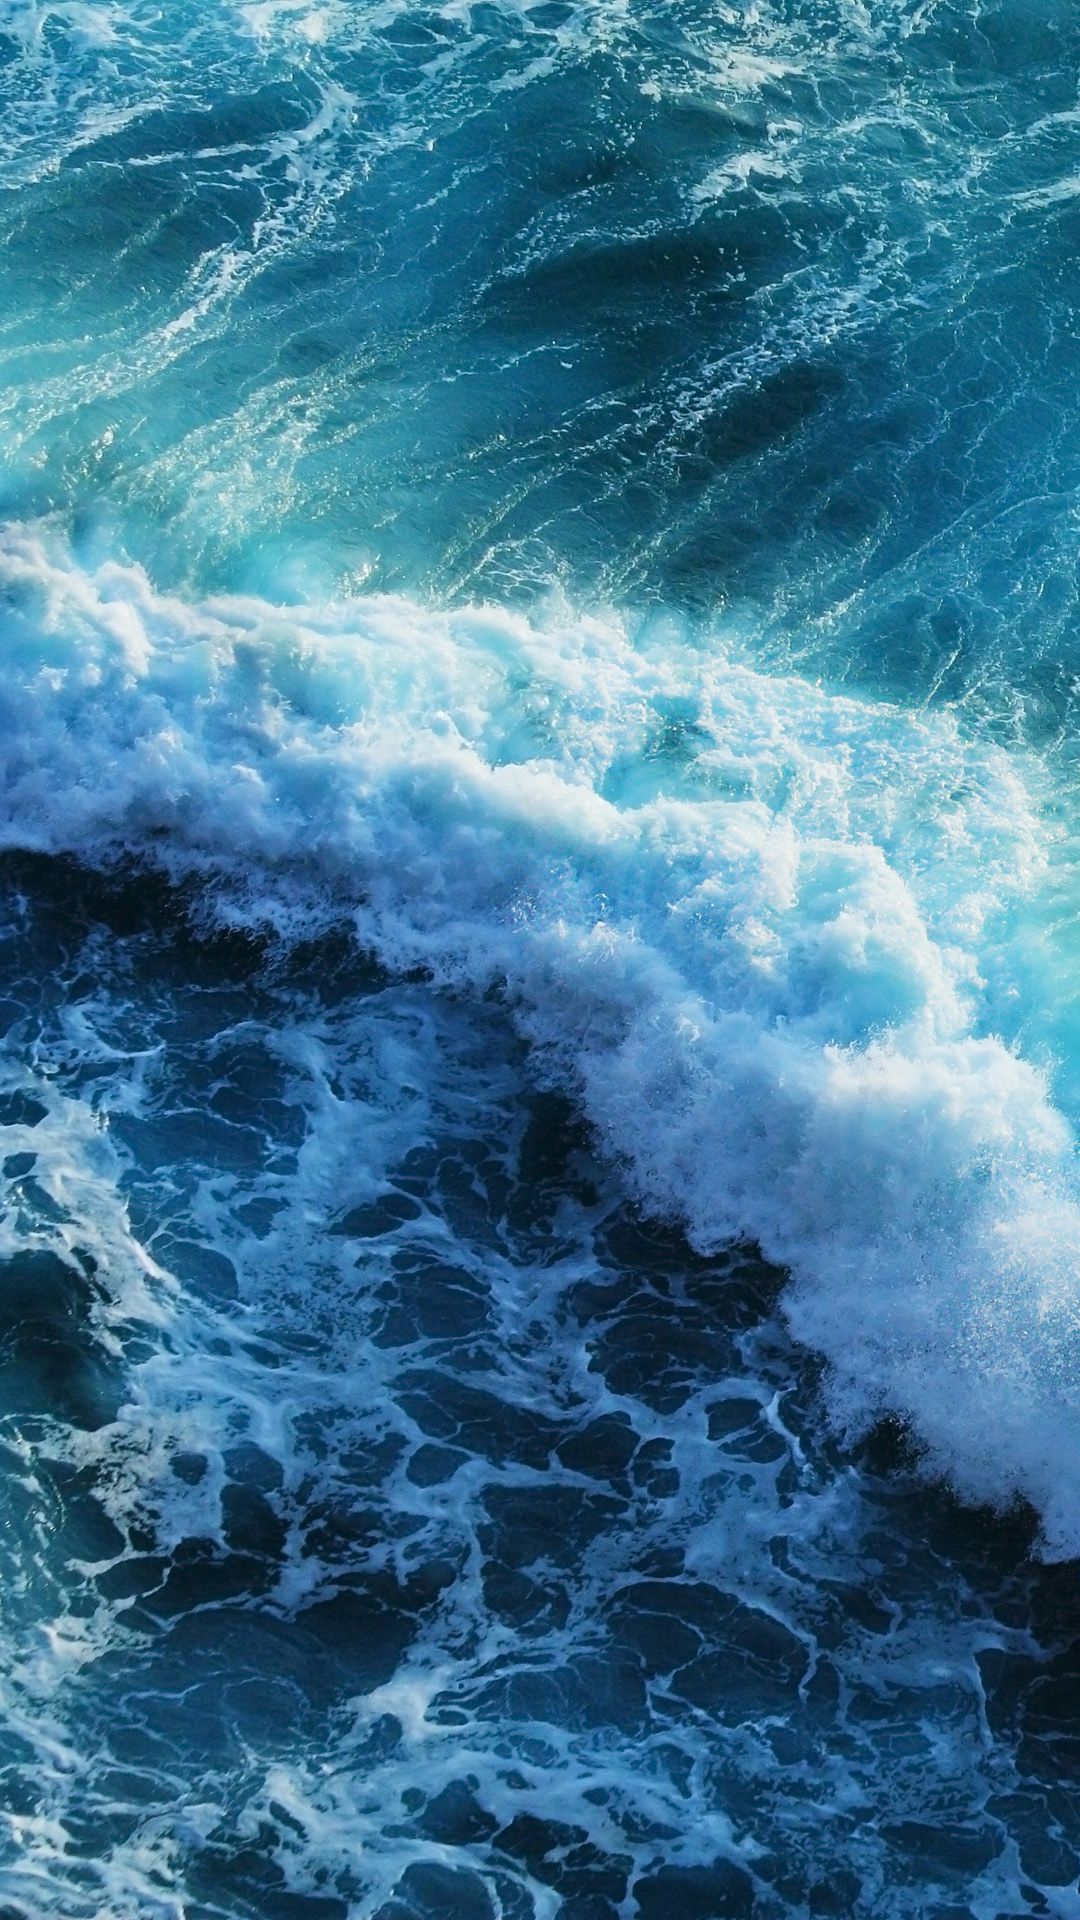 Blue Wave Pictures  Download Free Images on Unsplash